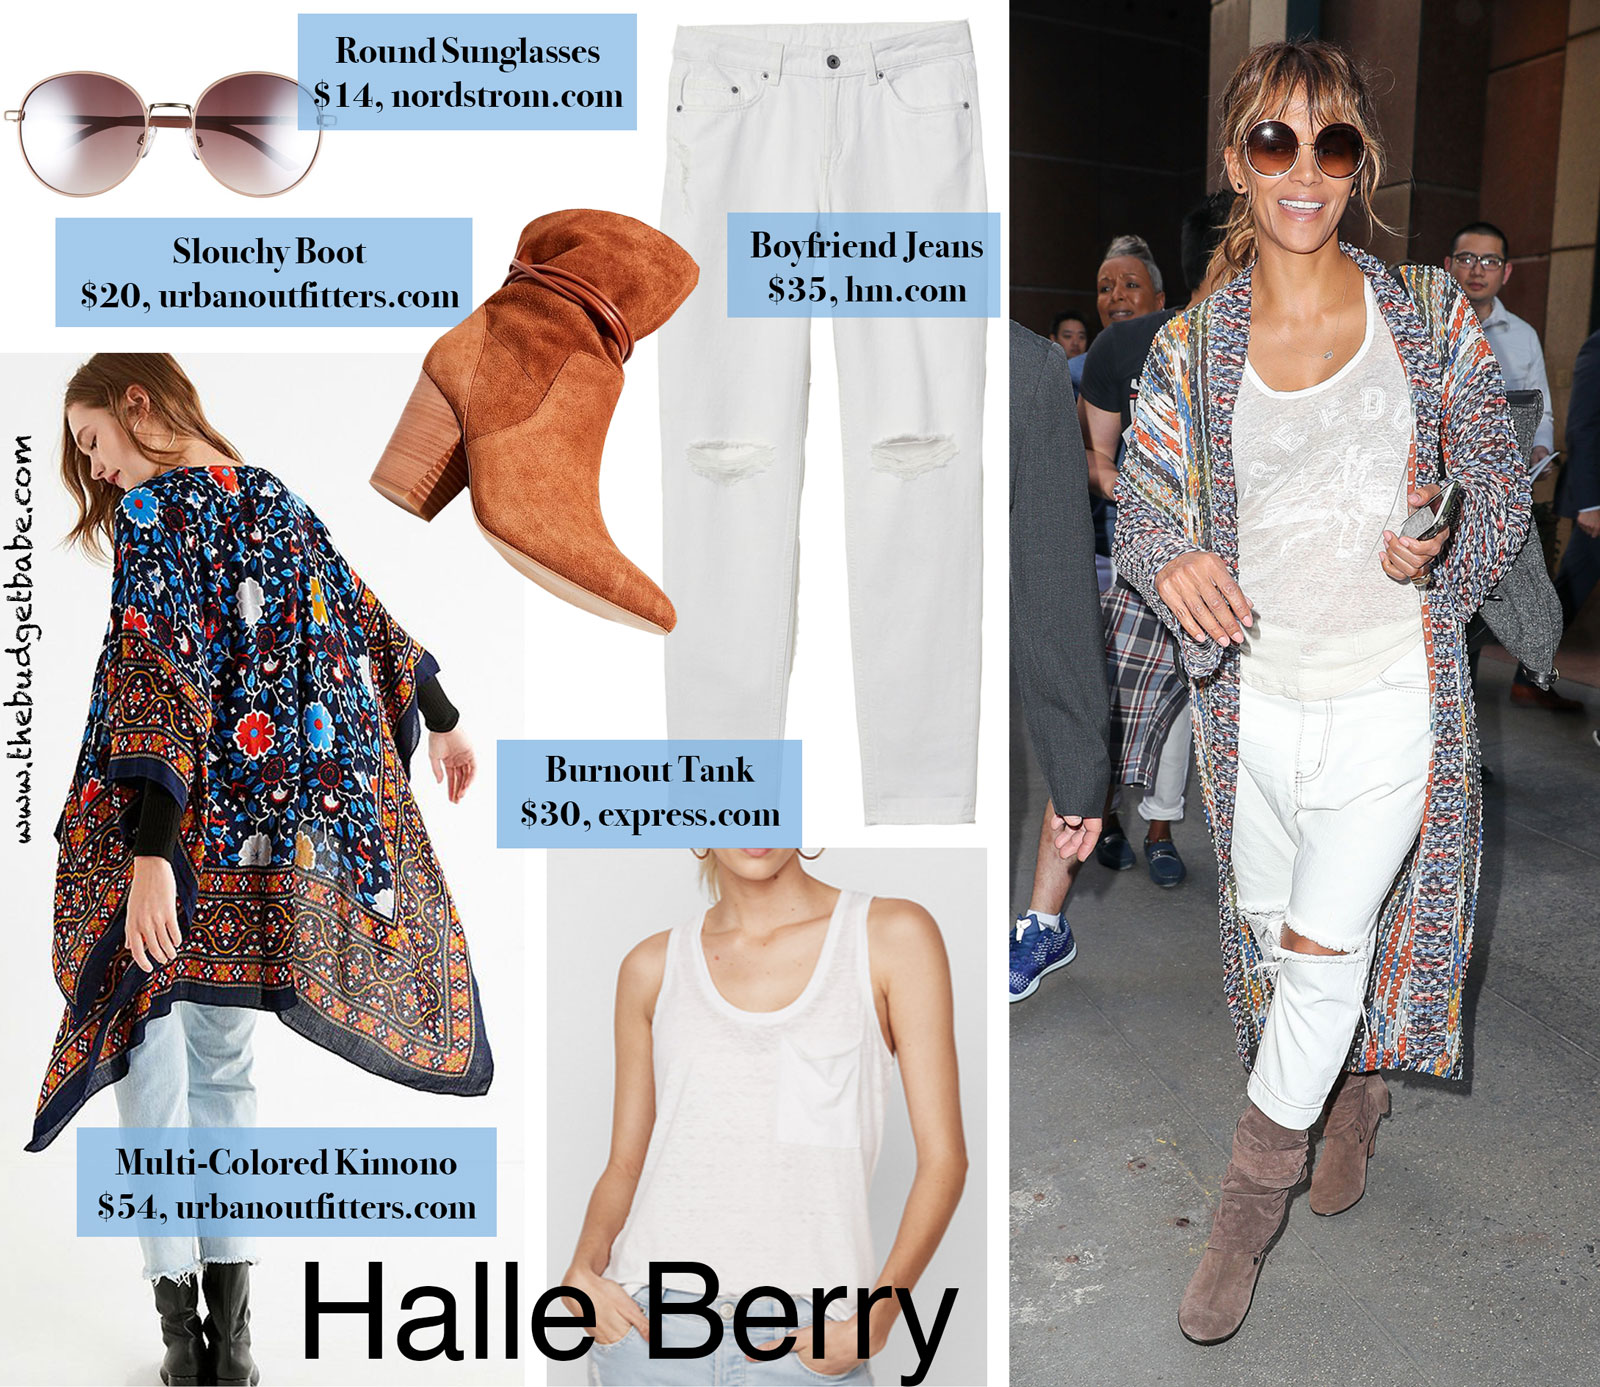 Halle Berry's ONETEASPOON Boyfriend Jeans Look for Less